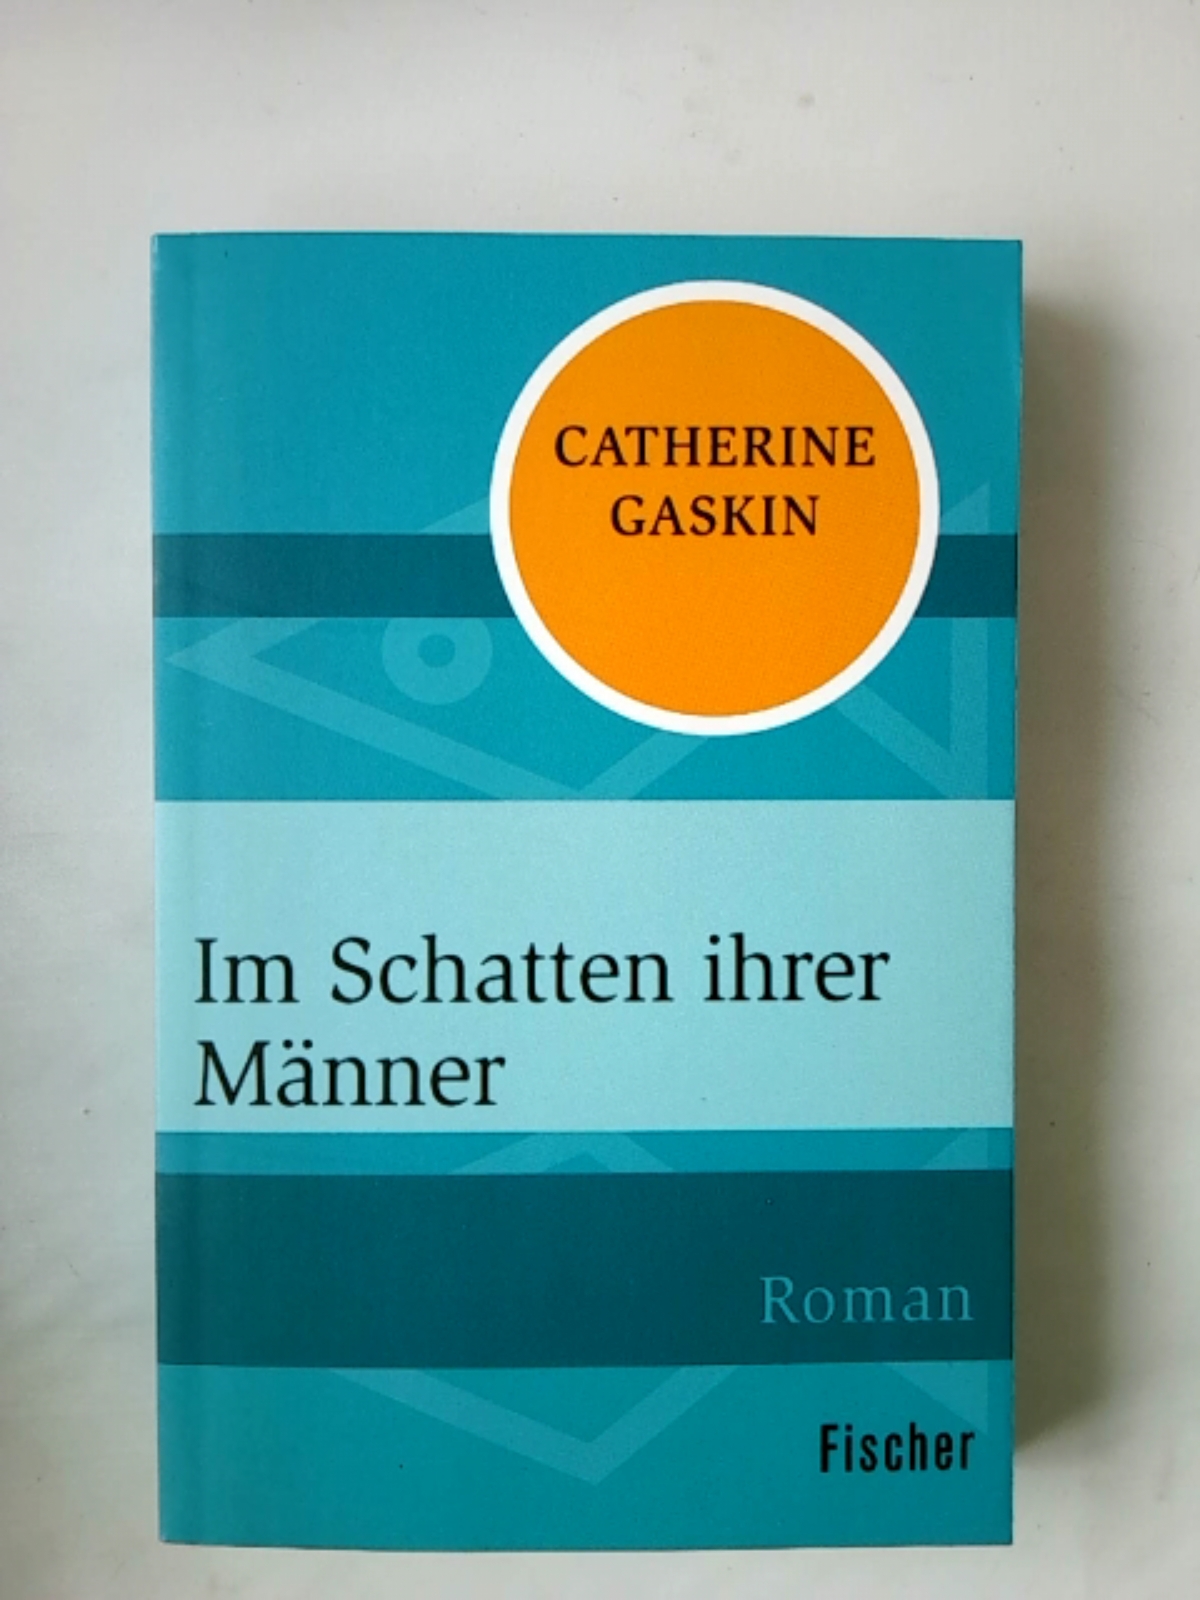 Im Schatten ihrer Männer: Roman [Paperback] Gaskin, Catherine; Foerster, Iris and Foerster, Rolf Hellmut - Catherine Gaskin